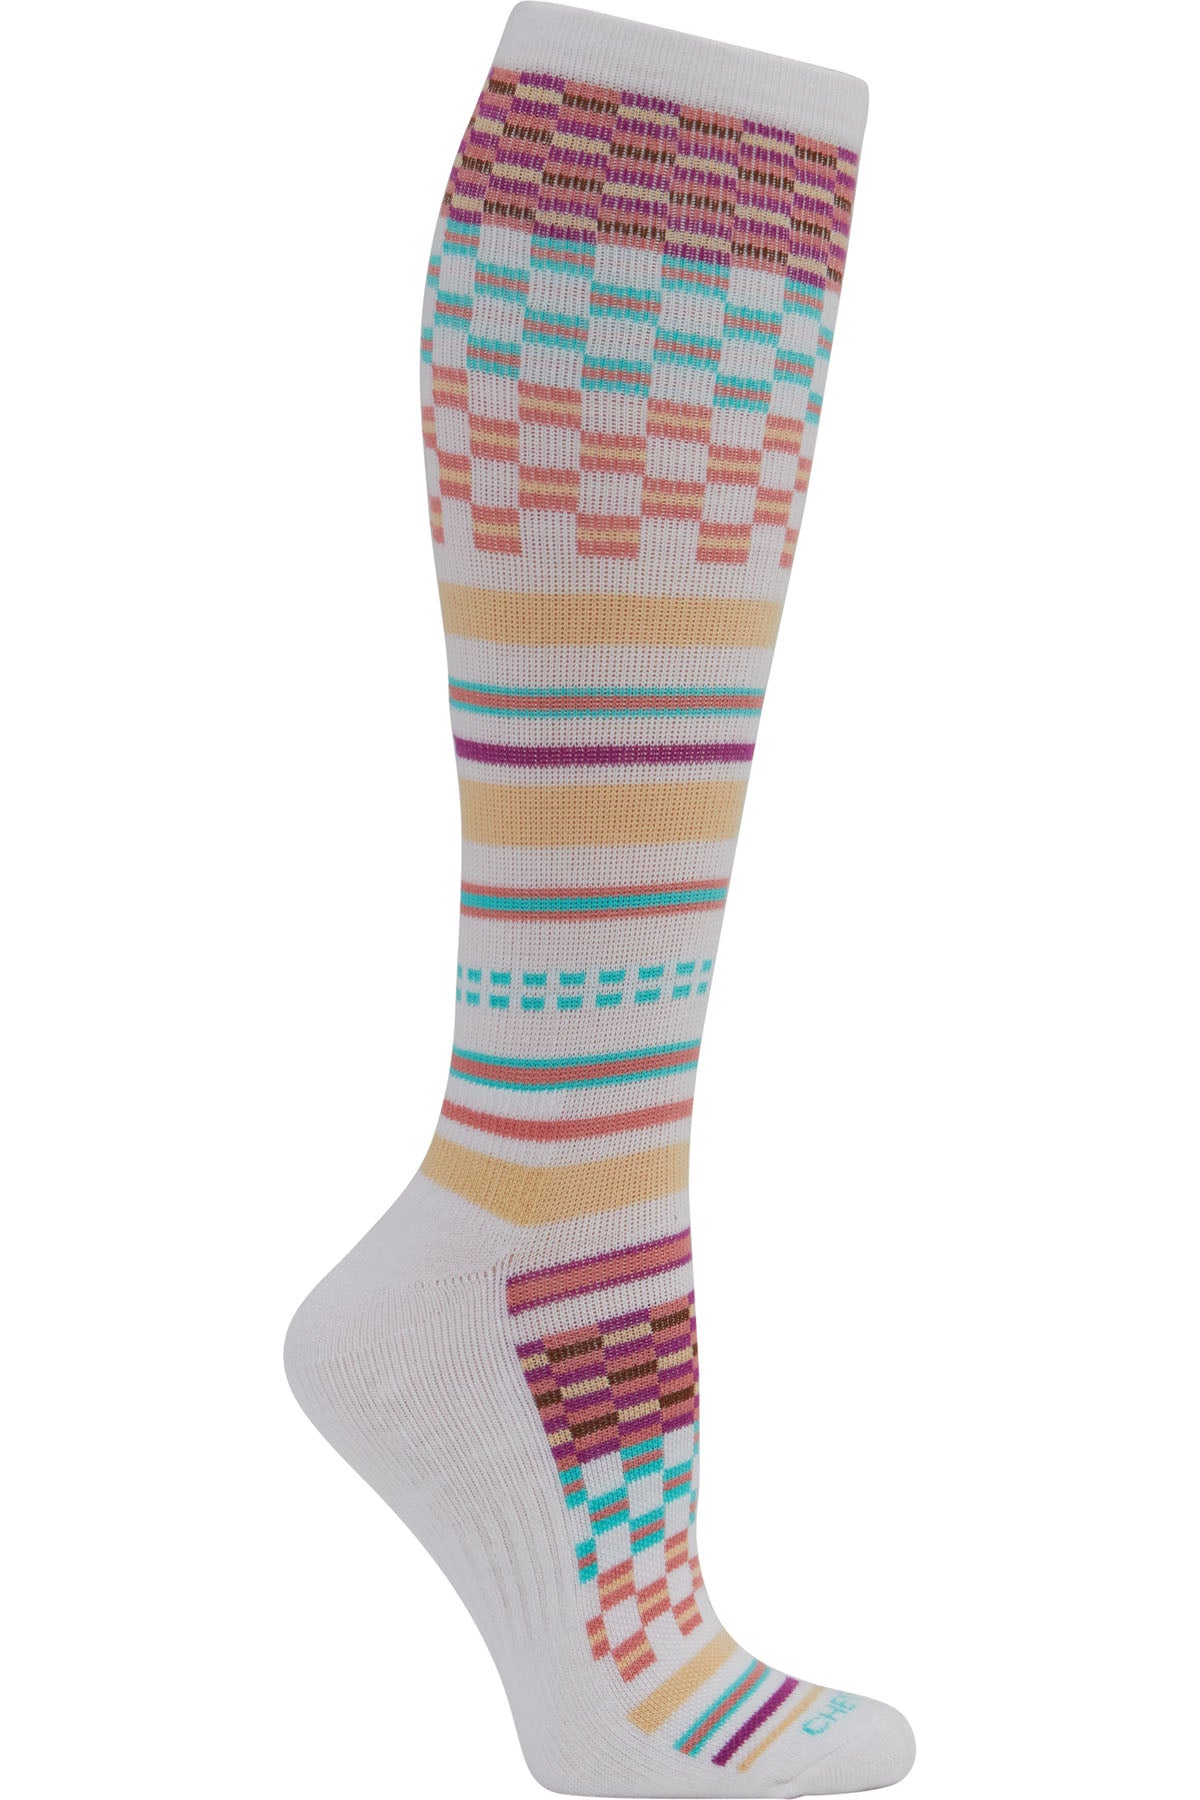 Knee High Compression Socks 15-20 mmHg Women's Compression Socks Cherokee Legwear Mellow S/M 